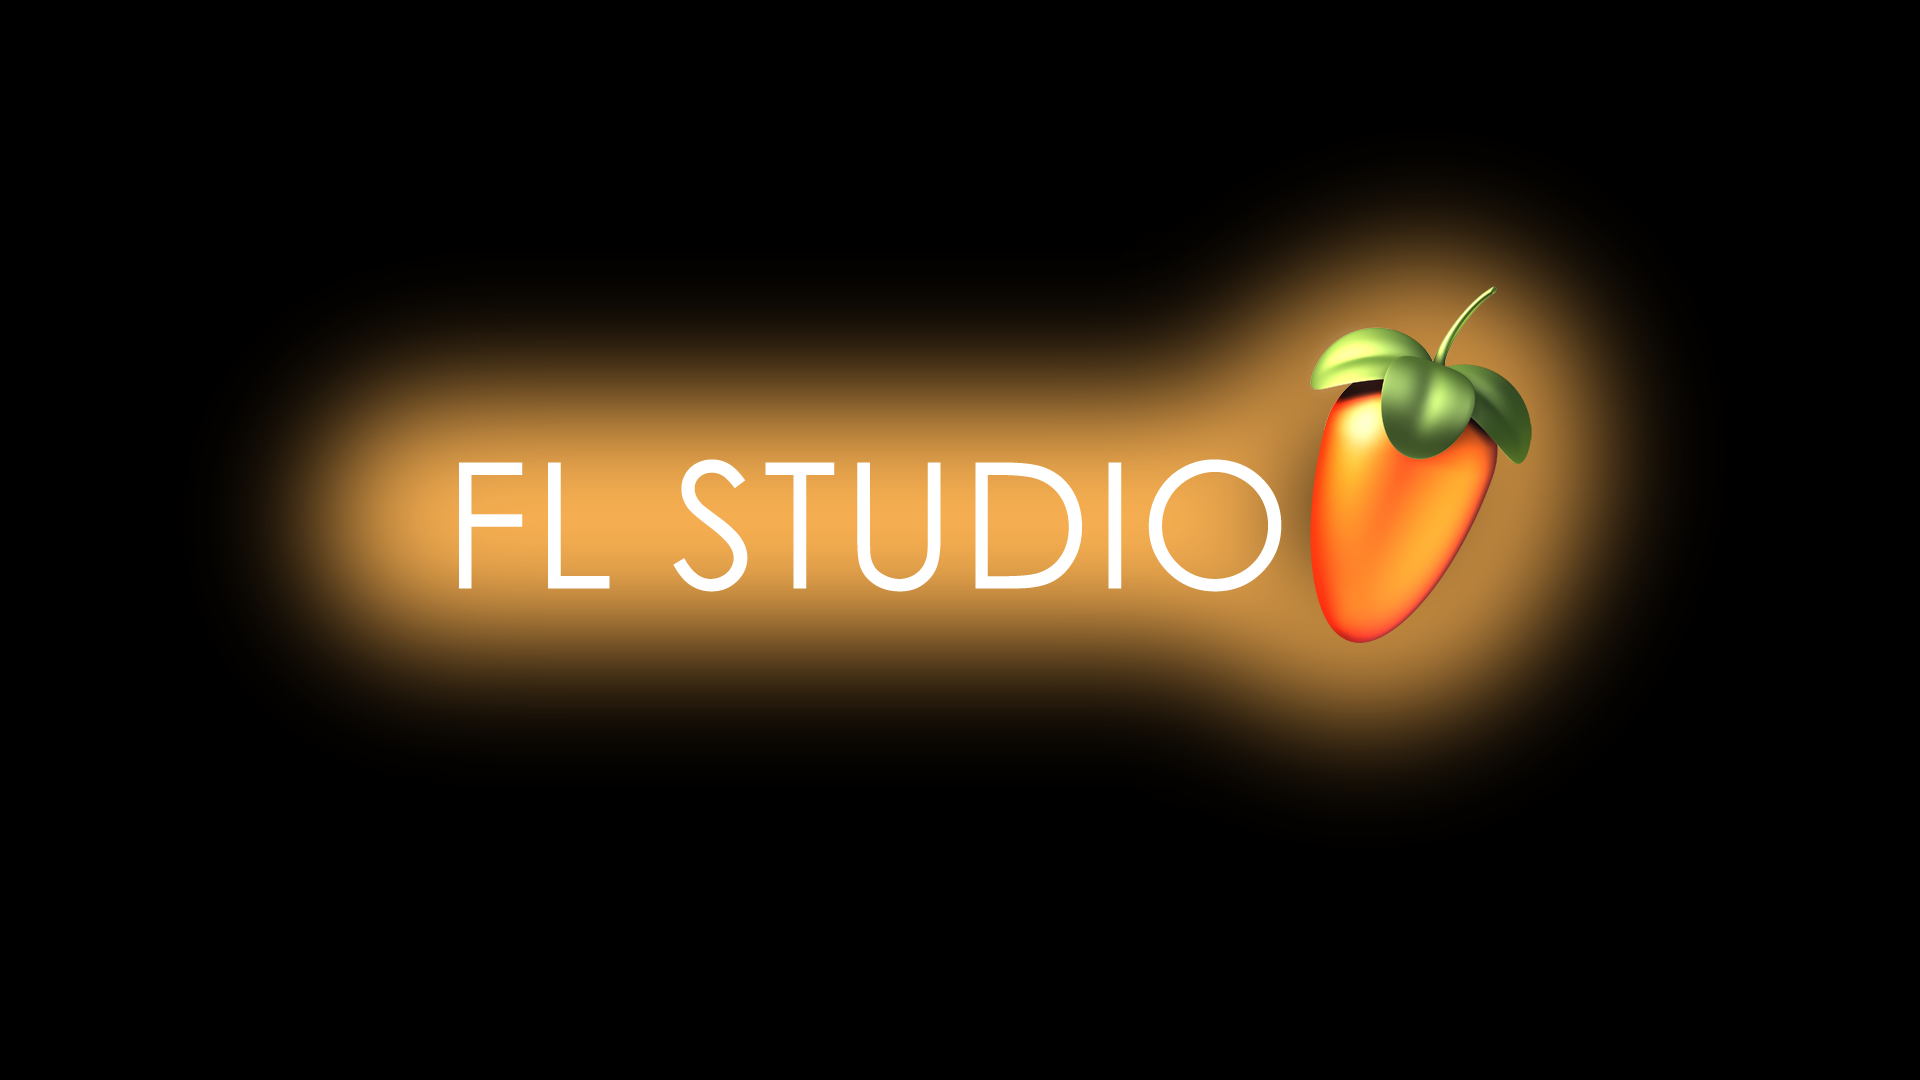 Free Download Fl Studio Pictures - Fl Studio Logo Hd , HD Wallpaper & Backgrounds